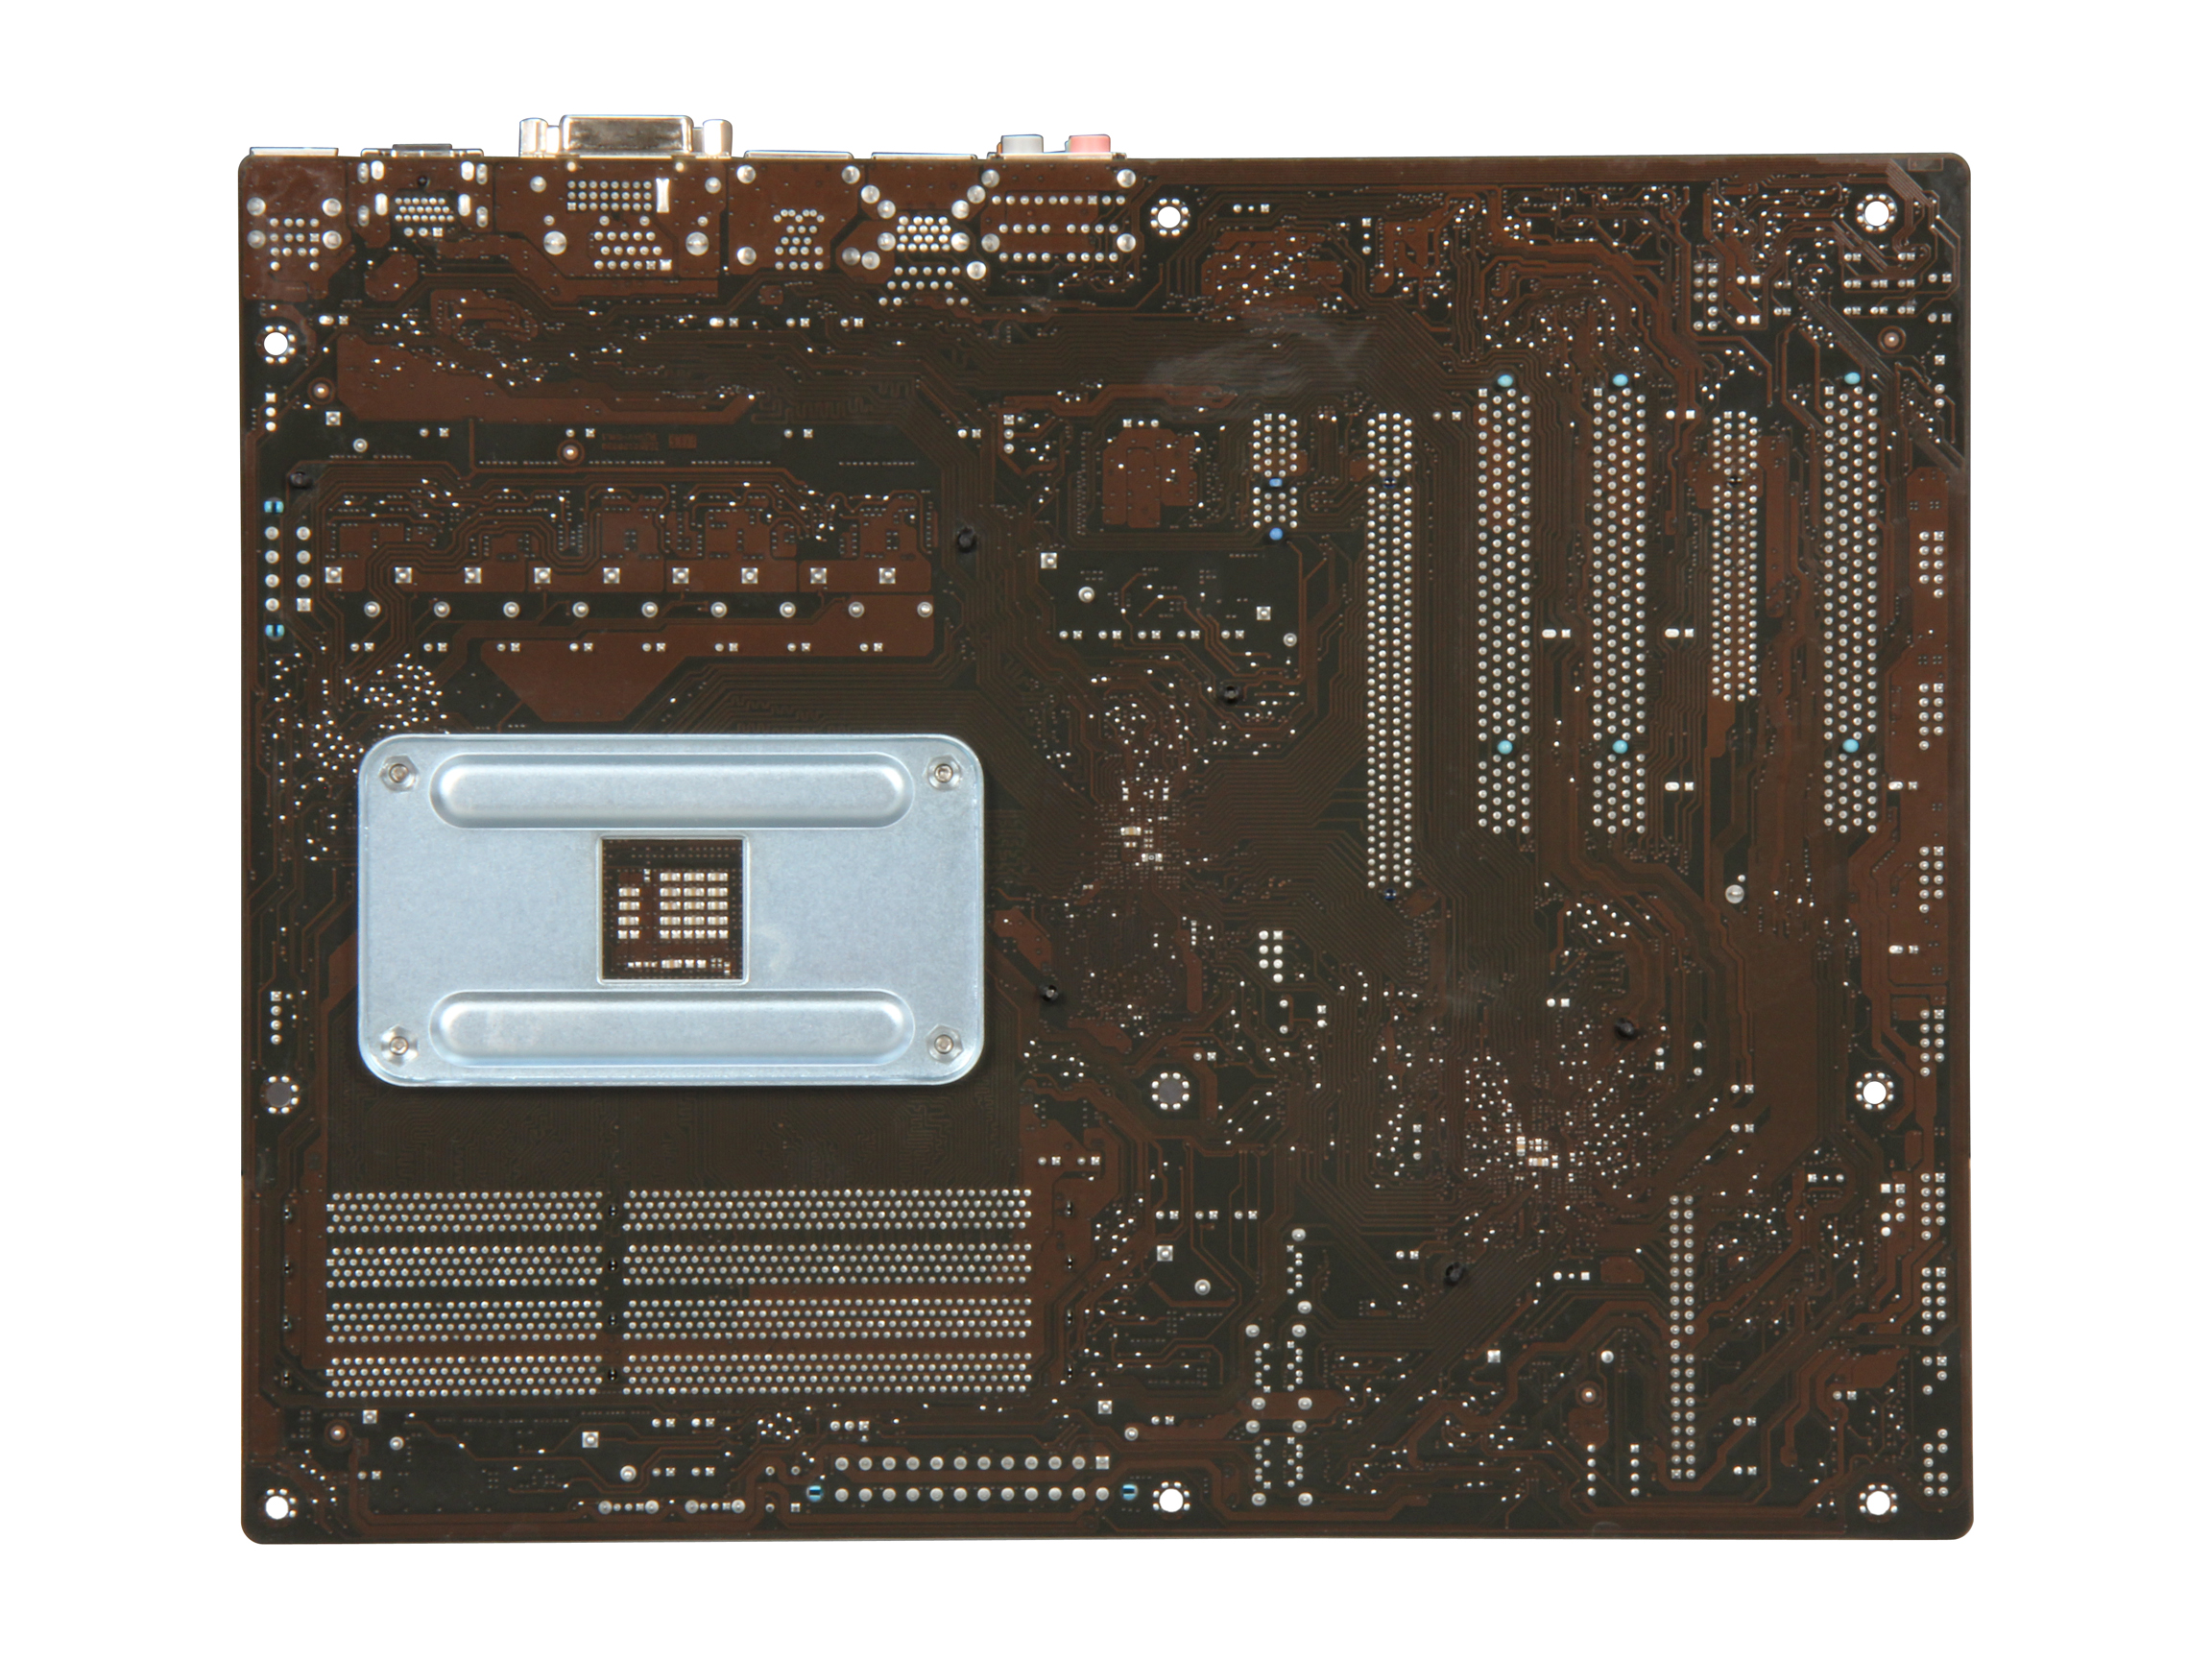 ASUS M5A88 V EVO AM3+ AMD 880G HDMI SATA 6Gb/s USB 3.0 ATX AMD Motherboard